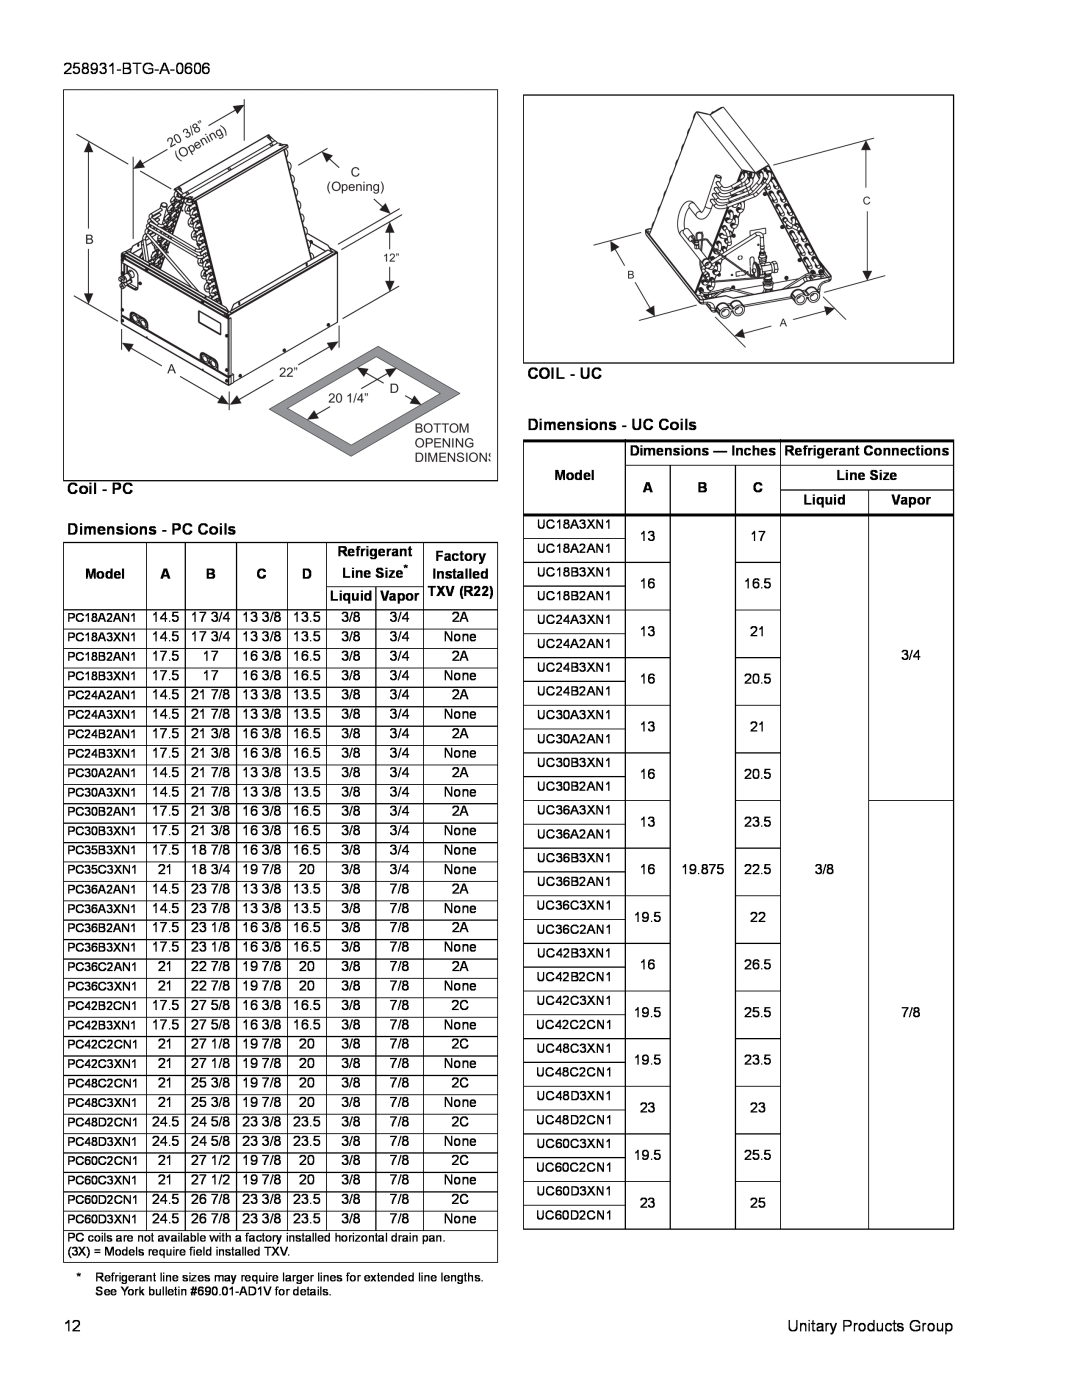 York MC, HD, HC, FC specifications Coil - PC Dimensions - PC Coils, COIL - UC Dimensions - UC Coils, BTG-A-0606 